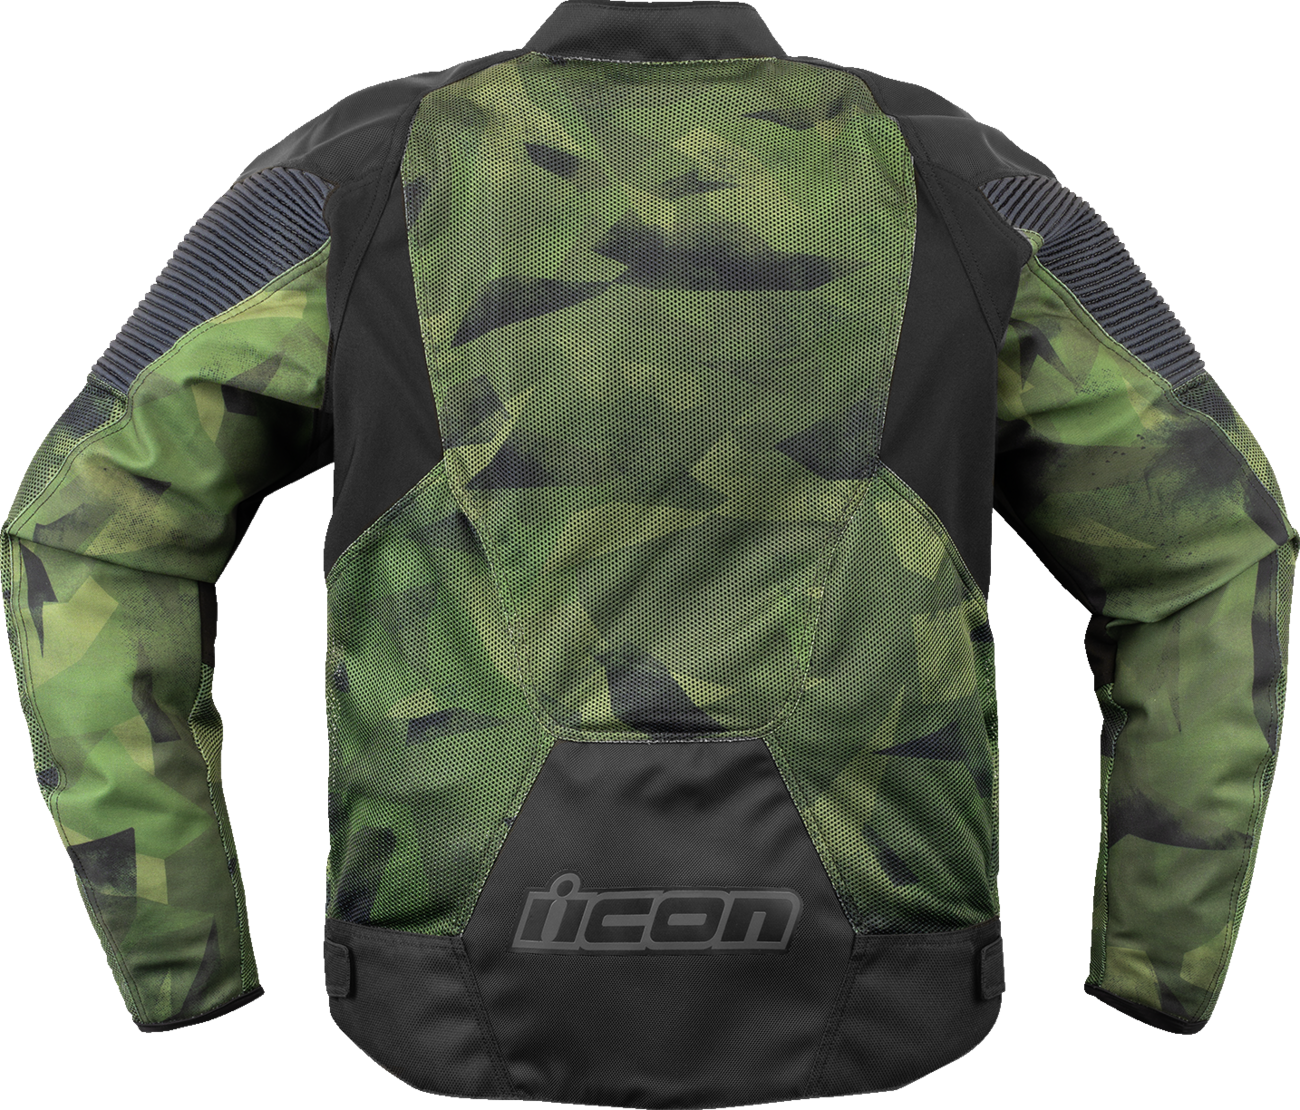 ICON Overlord3 Mesh™ Camo CE Jacket - Green - Medium 2820-6706